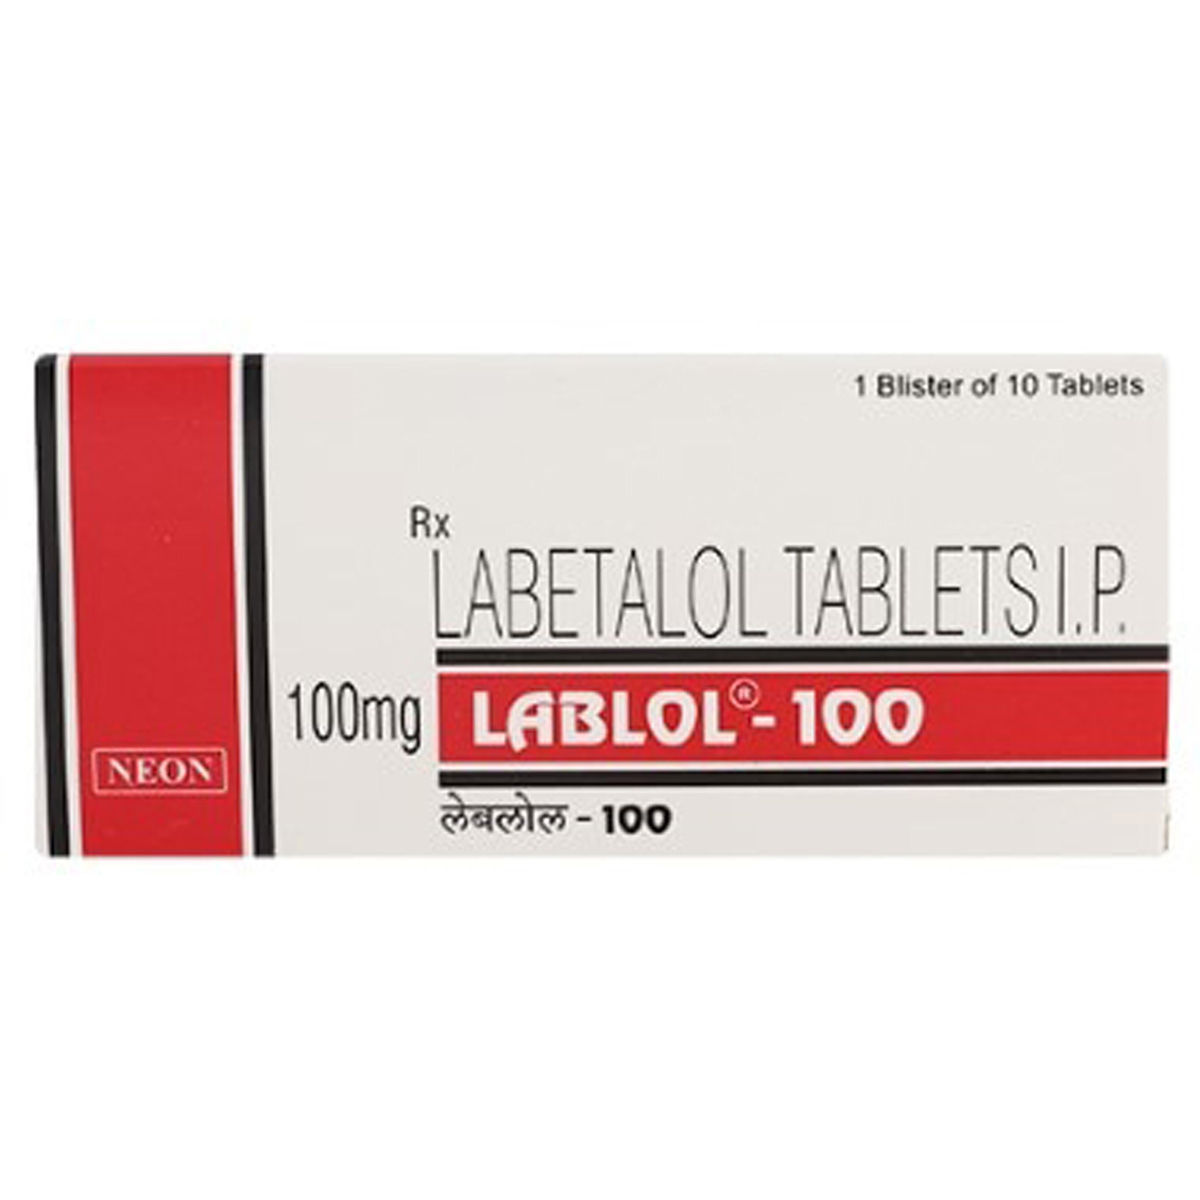 Labetalol tablets / Labetalol during pregnancy / Labebet 200 mg